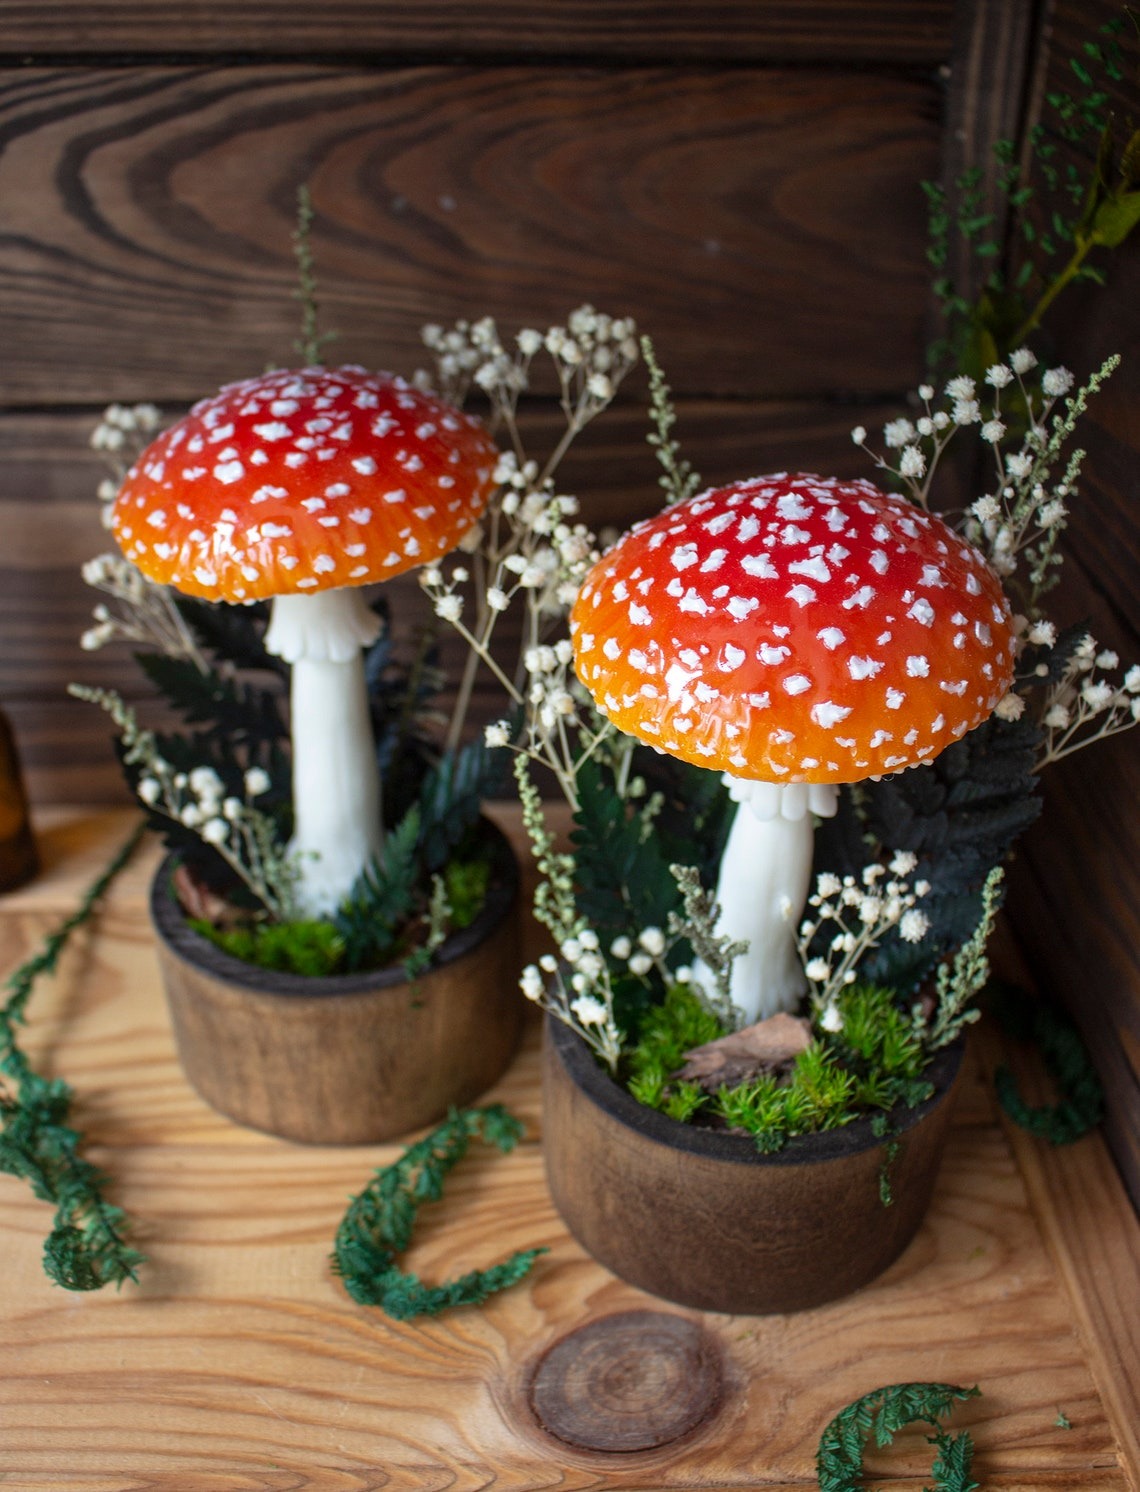 Wonderful Mushroom Lamps With Vivid Colors By Katya Sneg (1)